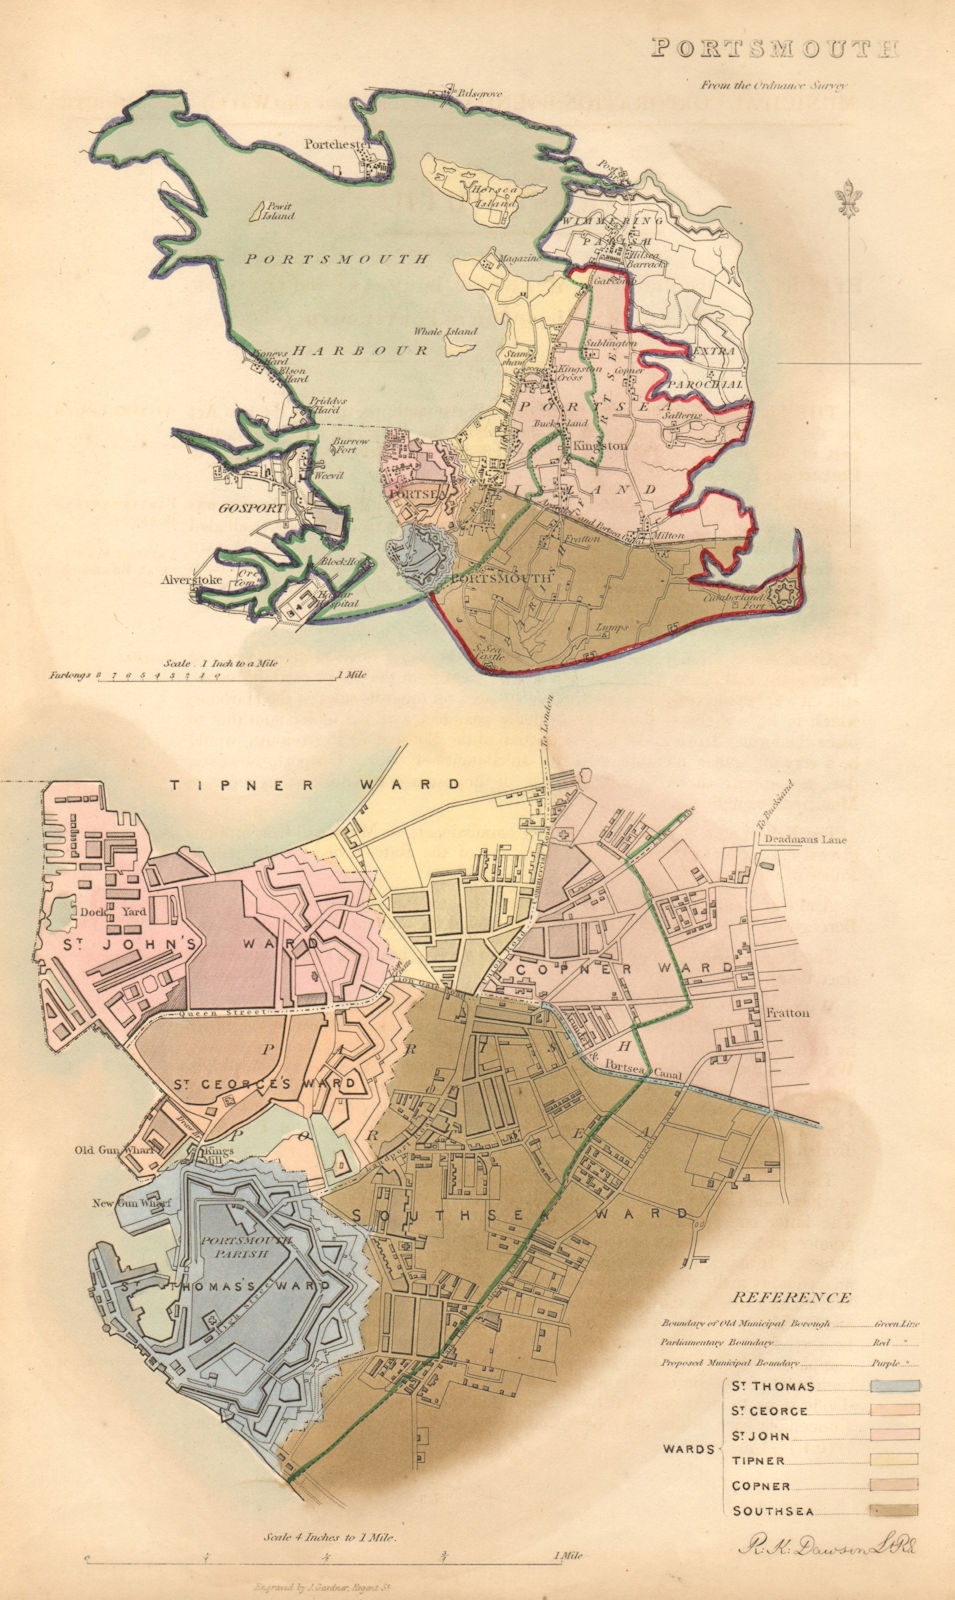 PORTSMOUTH borough/town/city plan. BOUNDARY COMMISSION Hampshire DAWSON 1837 map